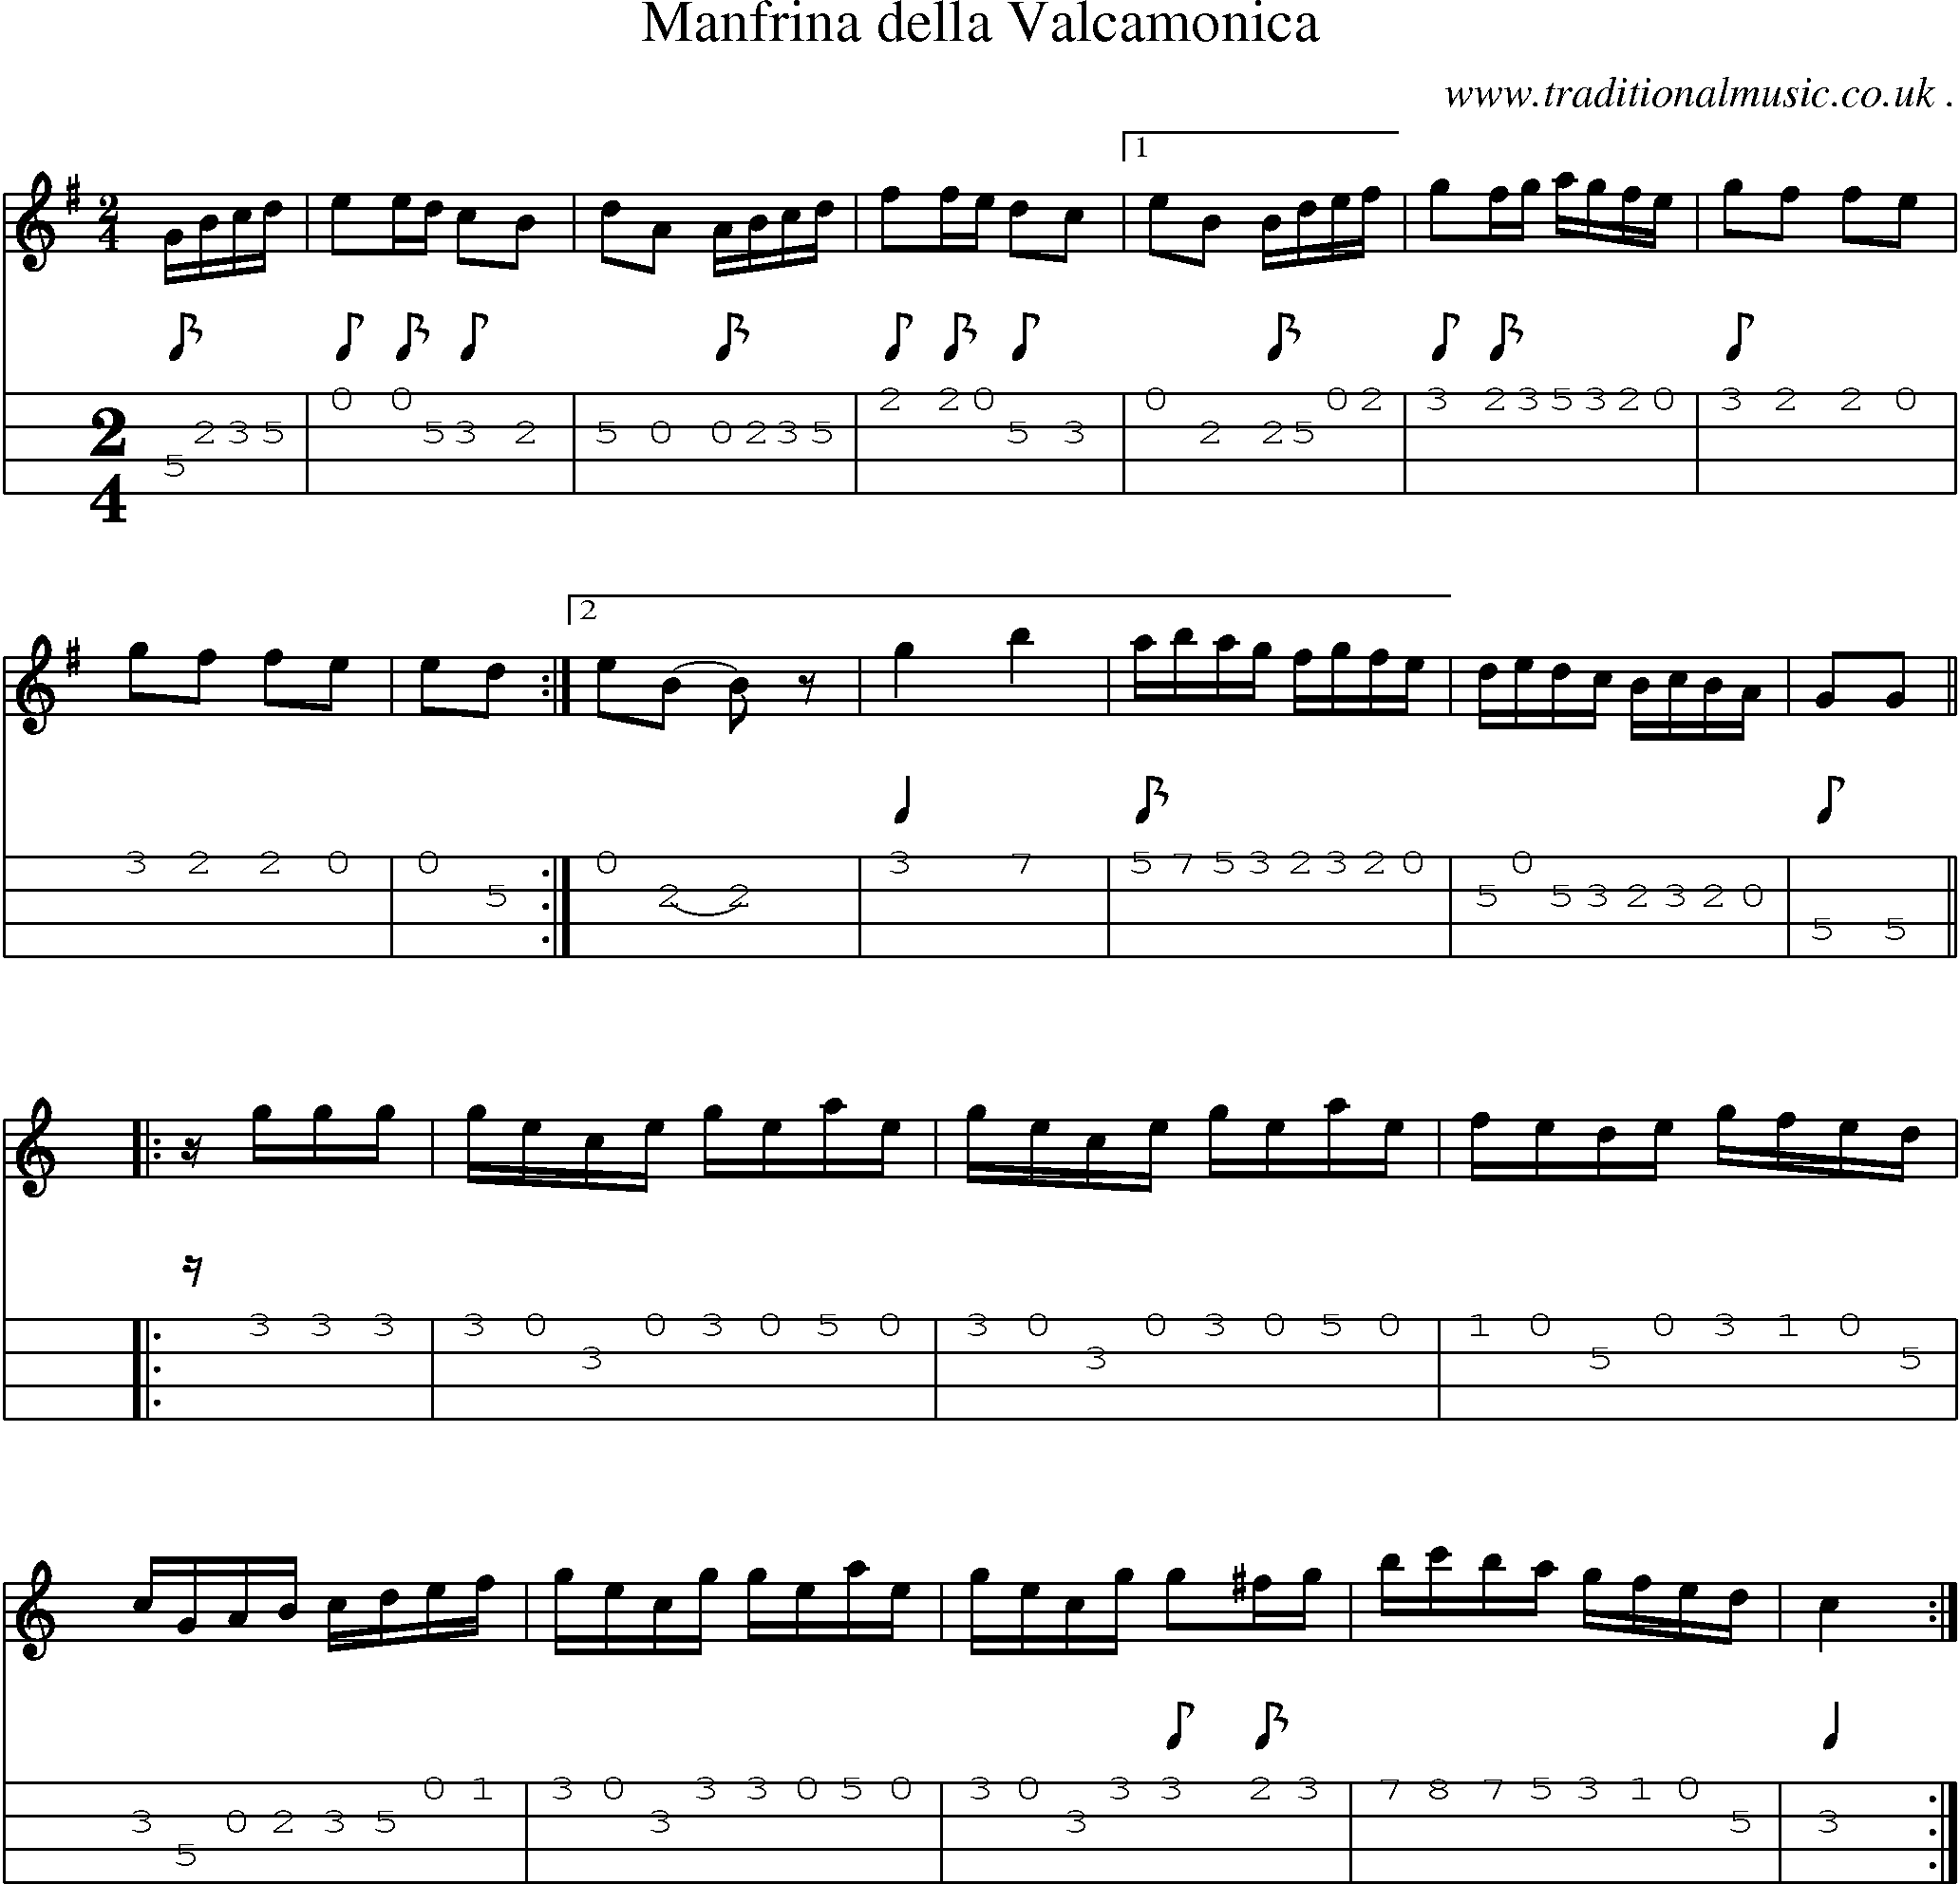 Sheet-Music and Mandolin Tabs for Manfrina Della Valcamonica